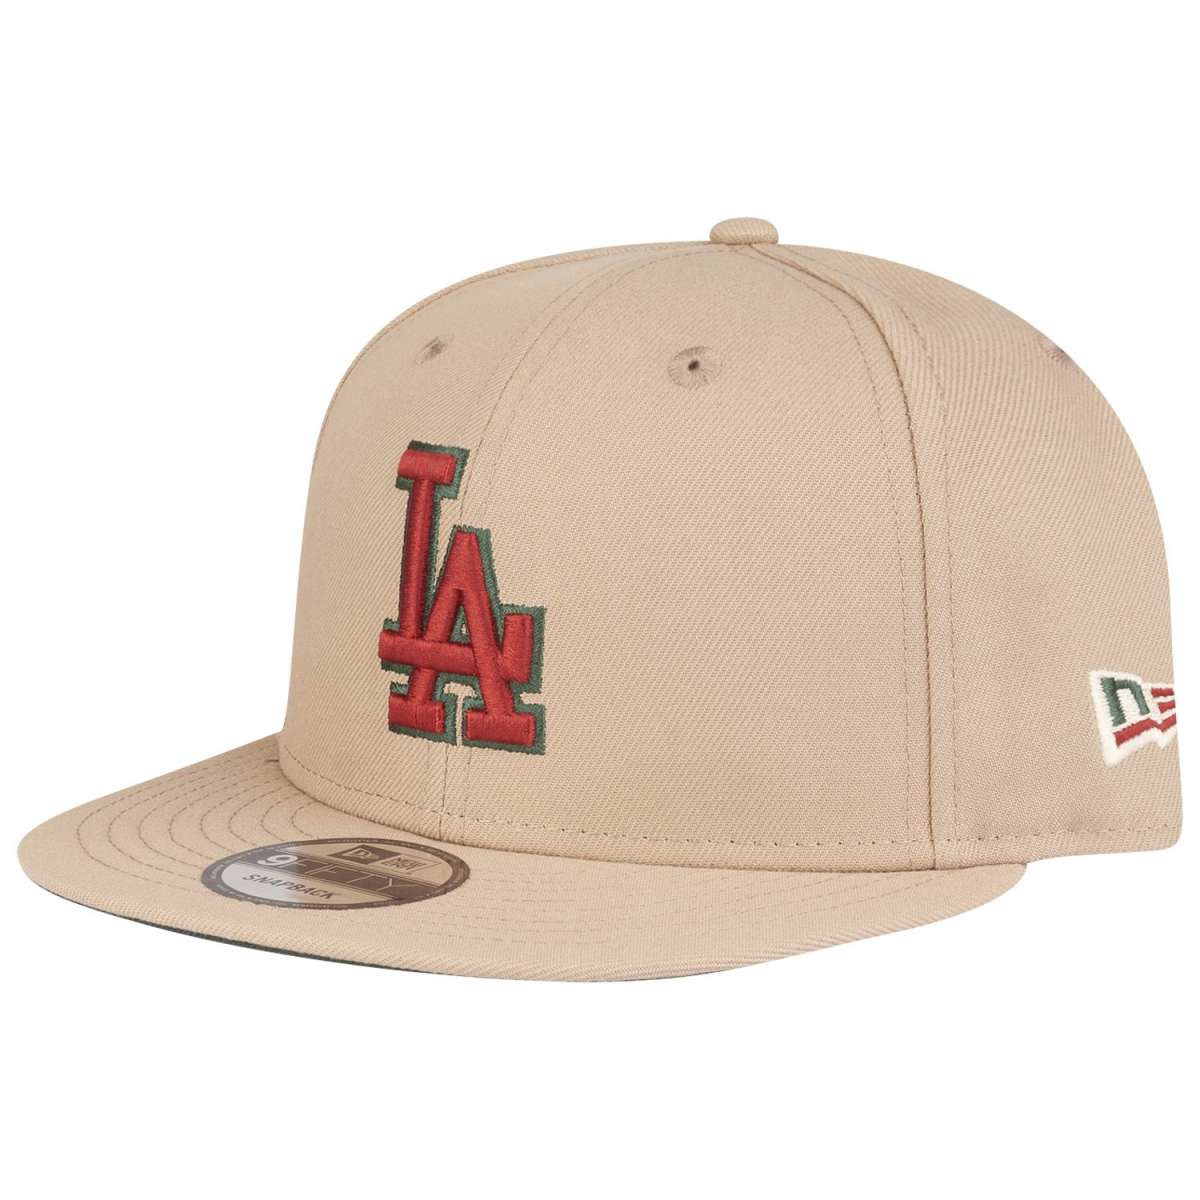 New Era 9Fifty Snapback Cap - Los Angeles Dodgers camel red | Snapback ...